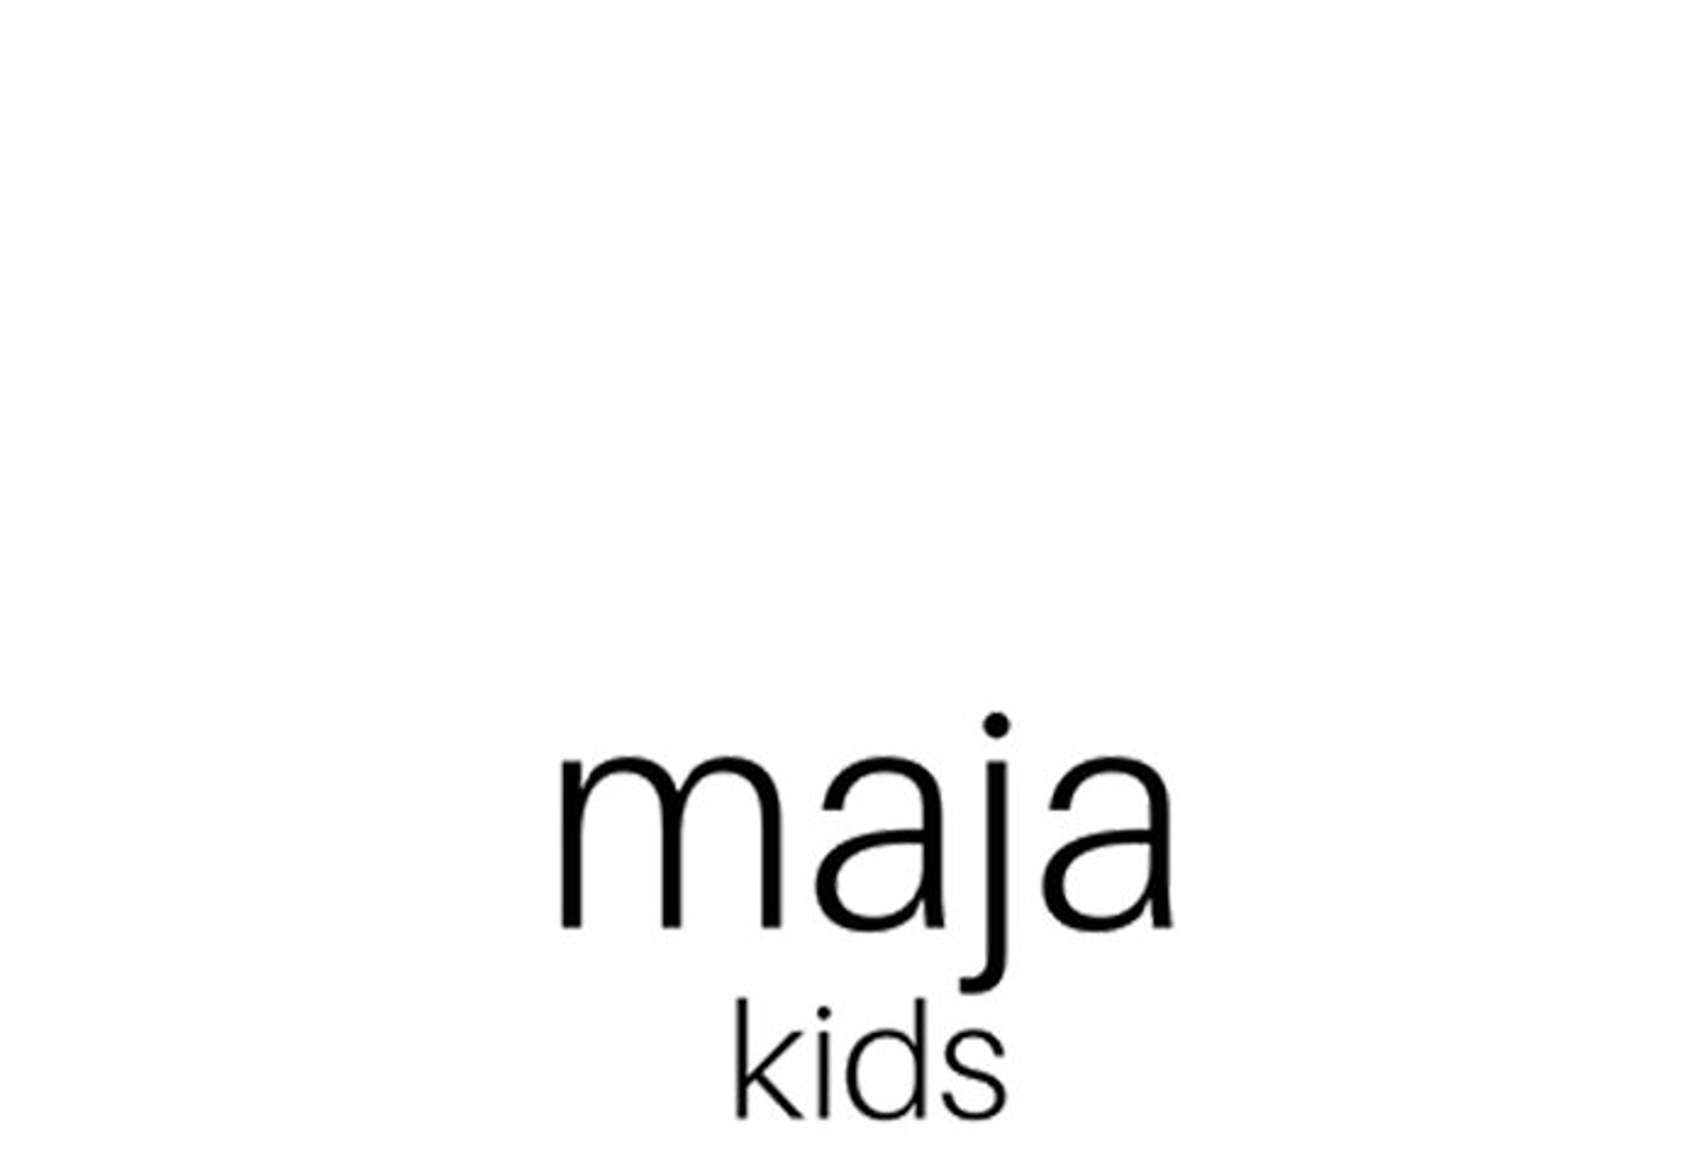 Maja kids